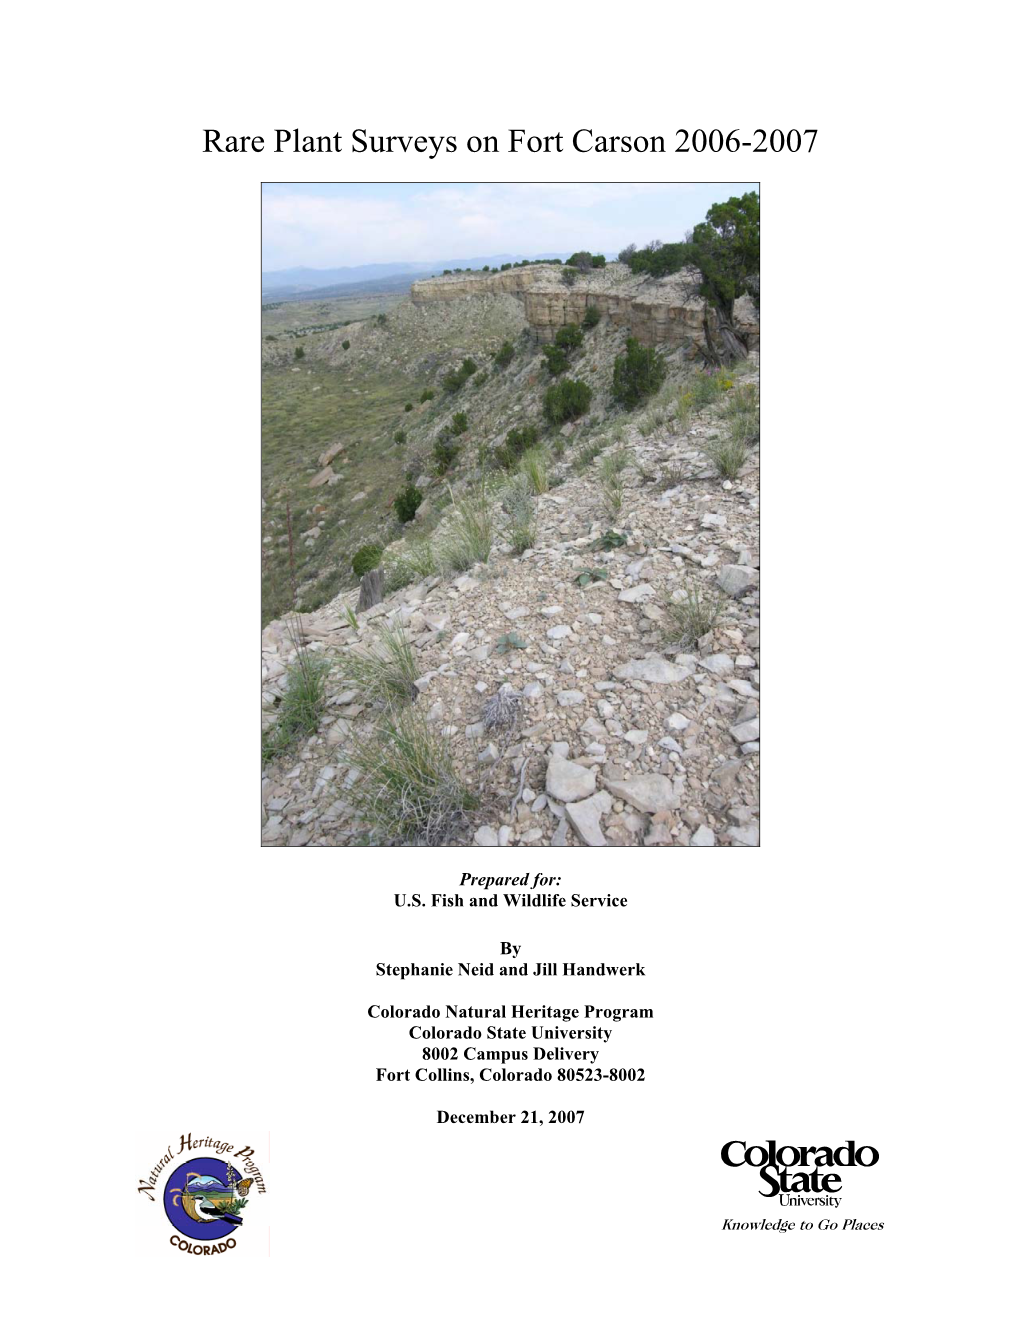 Rare Plant Surveys on Fort Carson Military Reserve 2006-2007